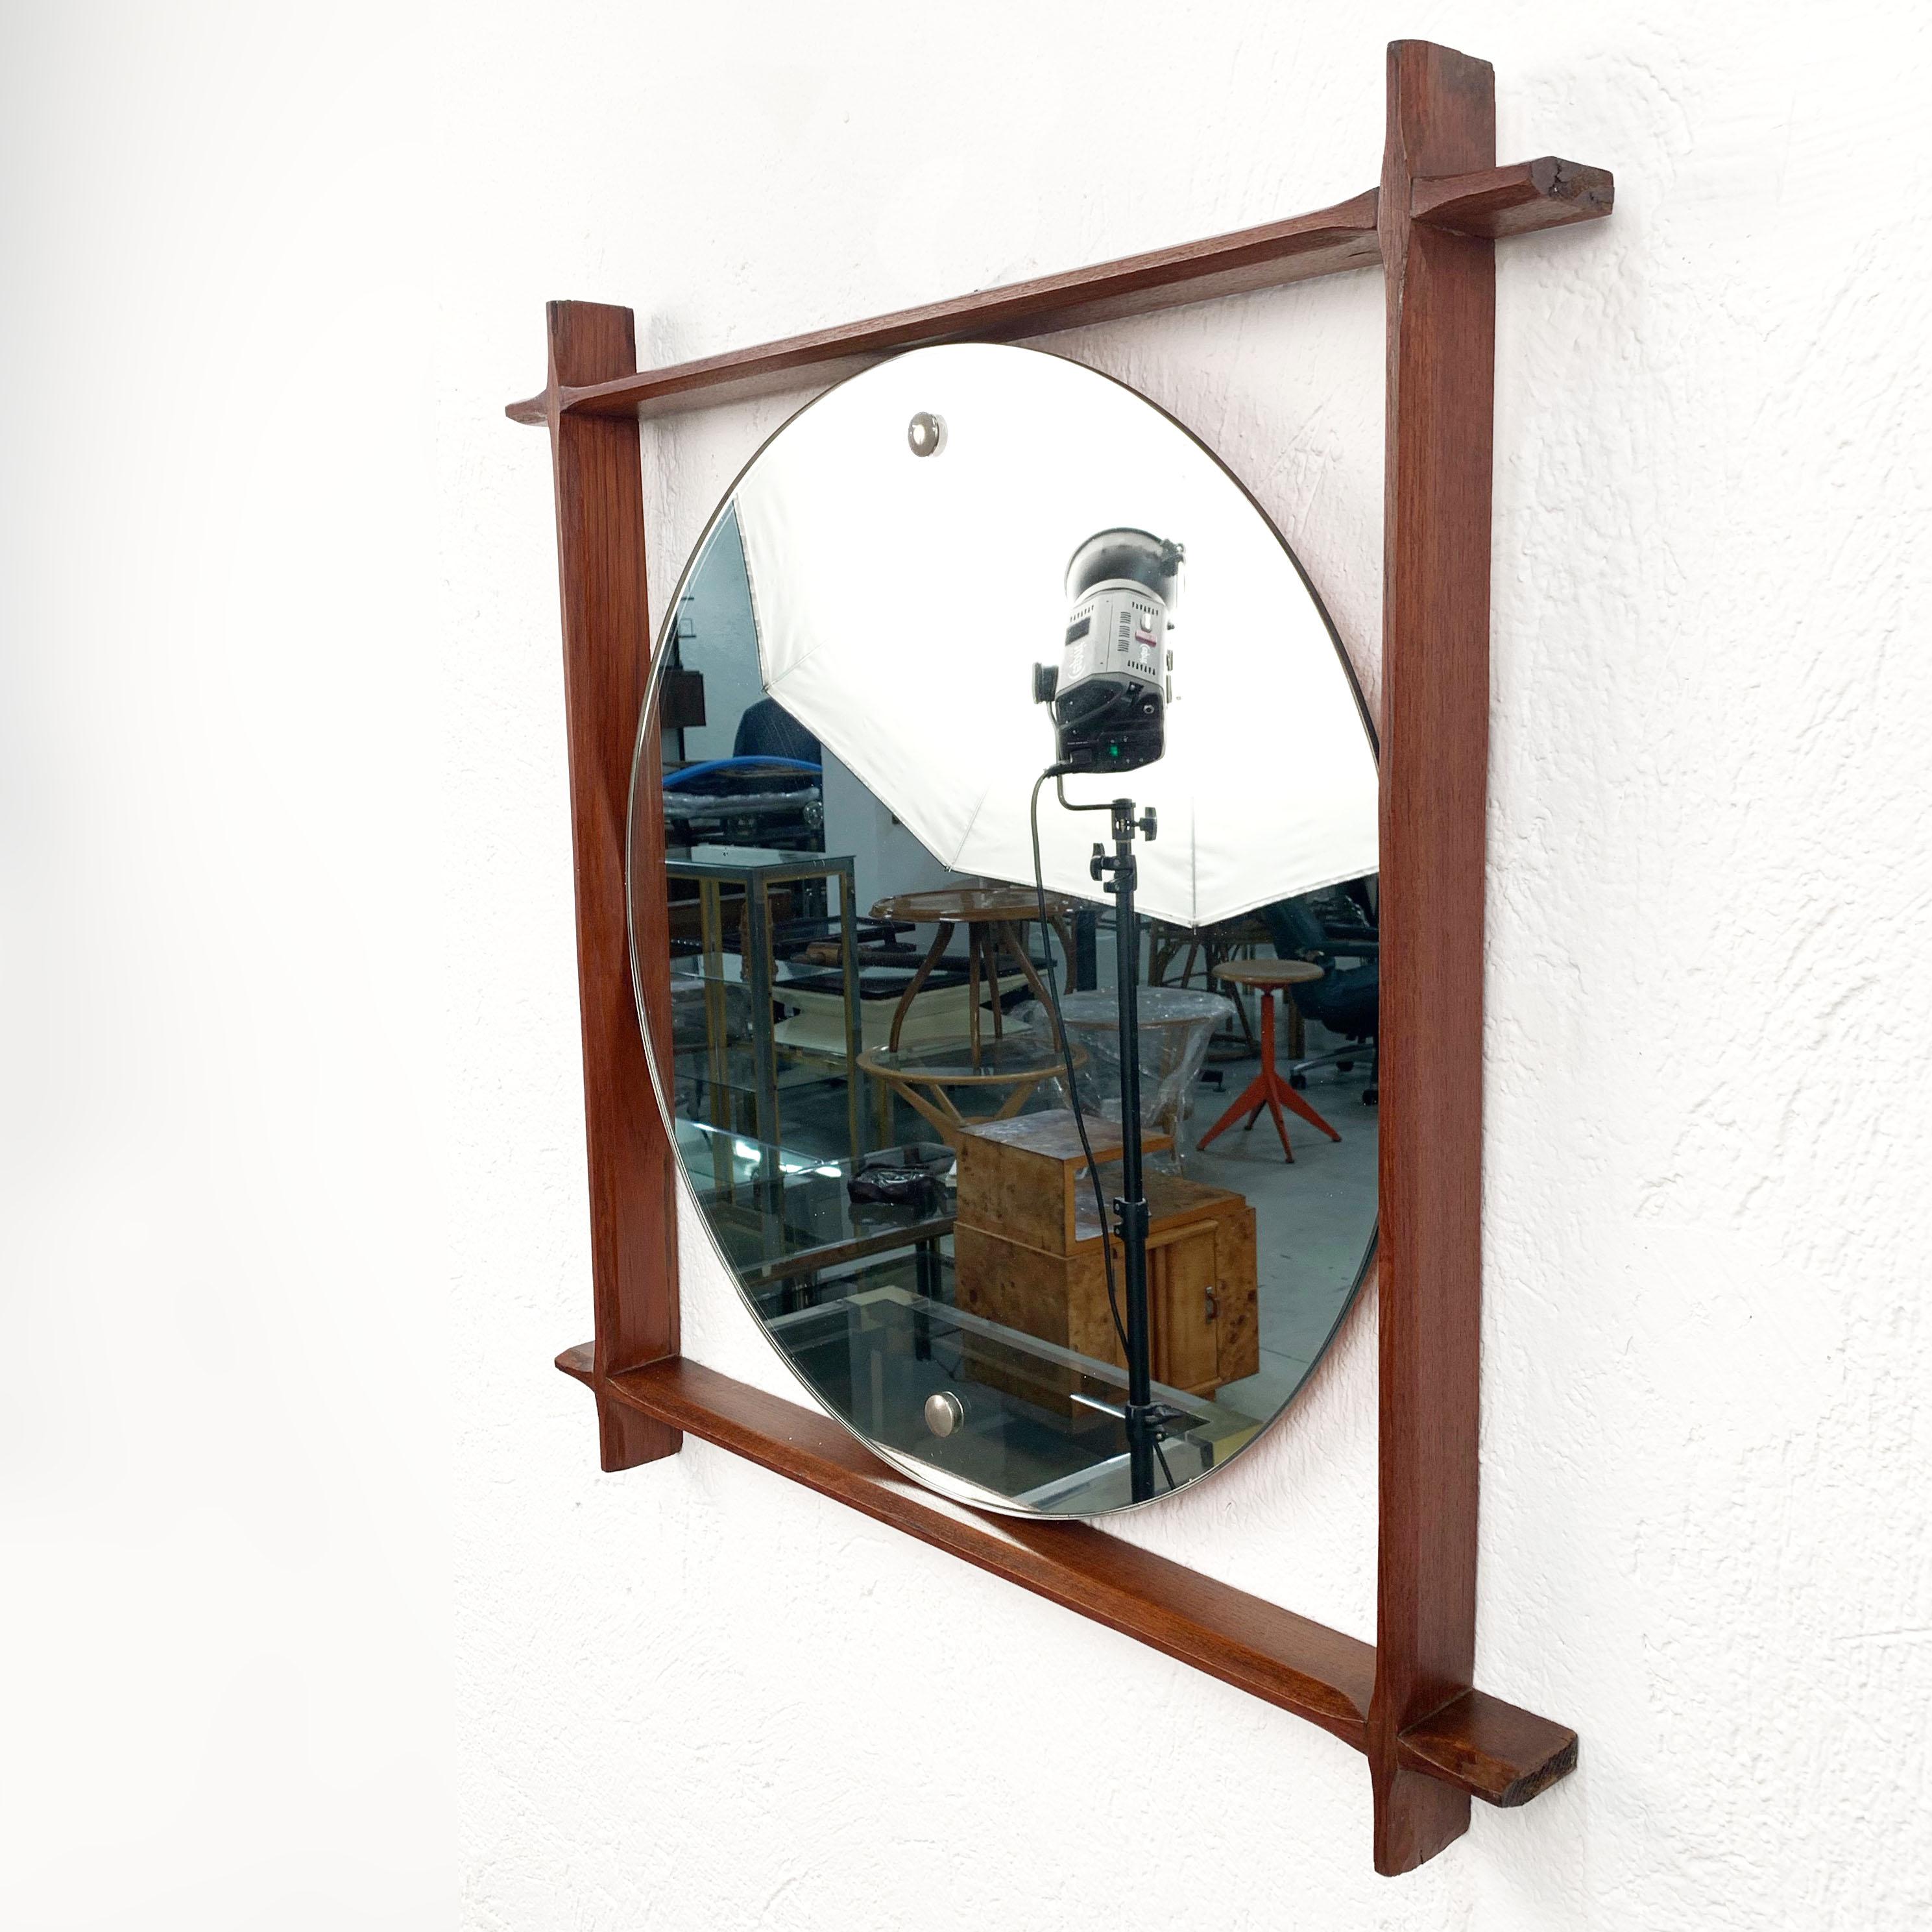 Italian Wall Mirror with Square Teak Frame, Midcentury Italia 1960s Scandinavian Style